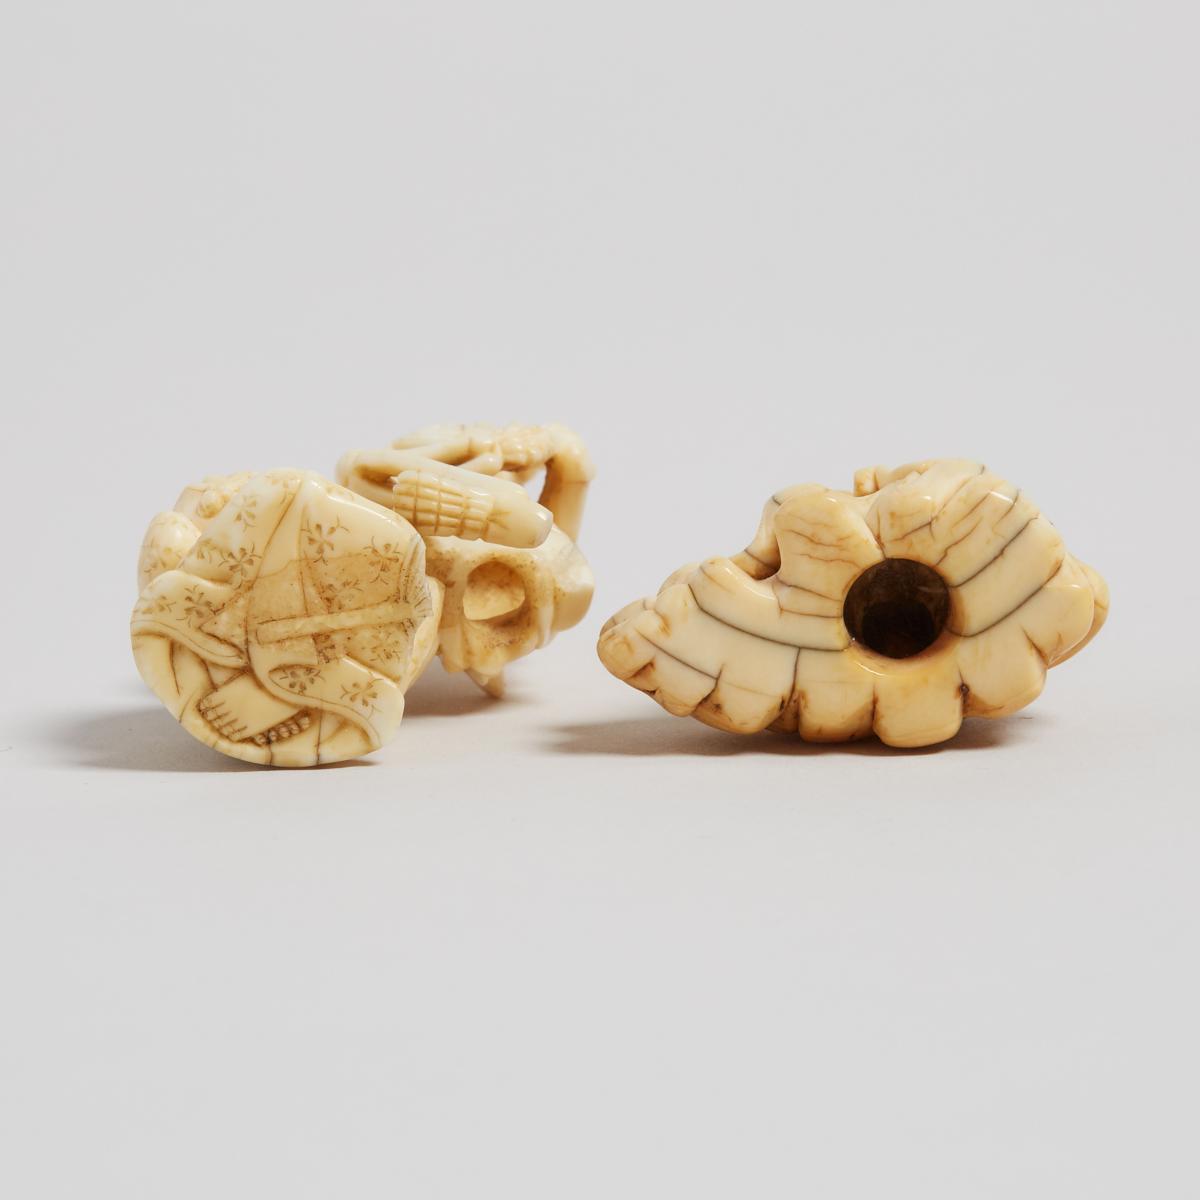 Two Ivory and Bone Carved Figural Netsuke, Edo/Meiji Period, 江戶／明治時期 牙雕石上僧 骨雕三味線演奏者一組兩件, largest hei - Image 3 of 7